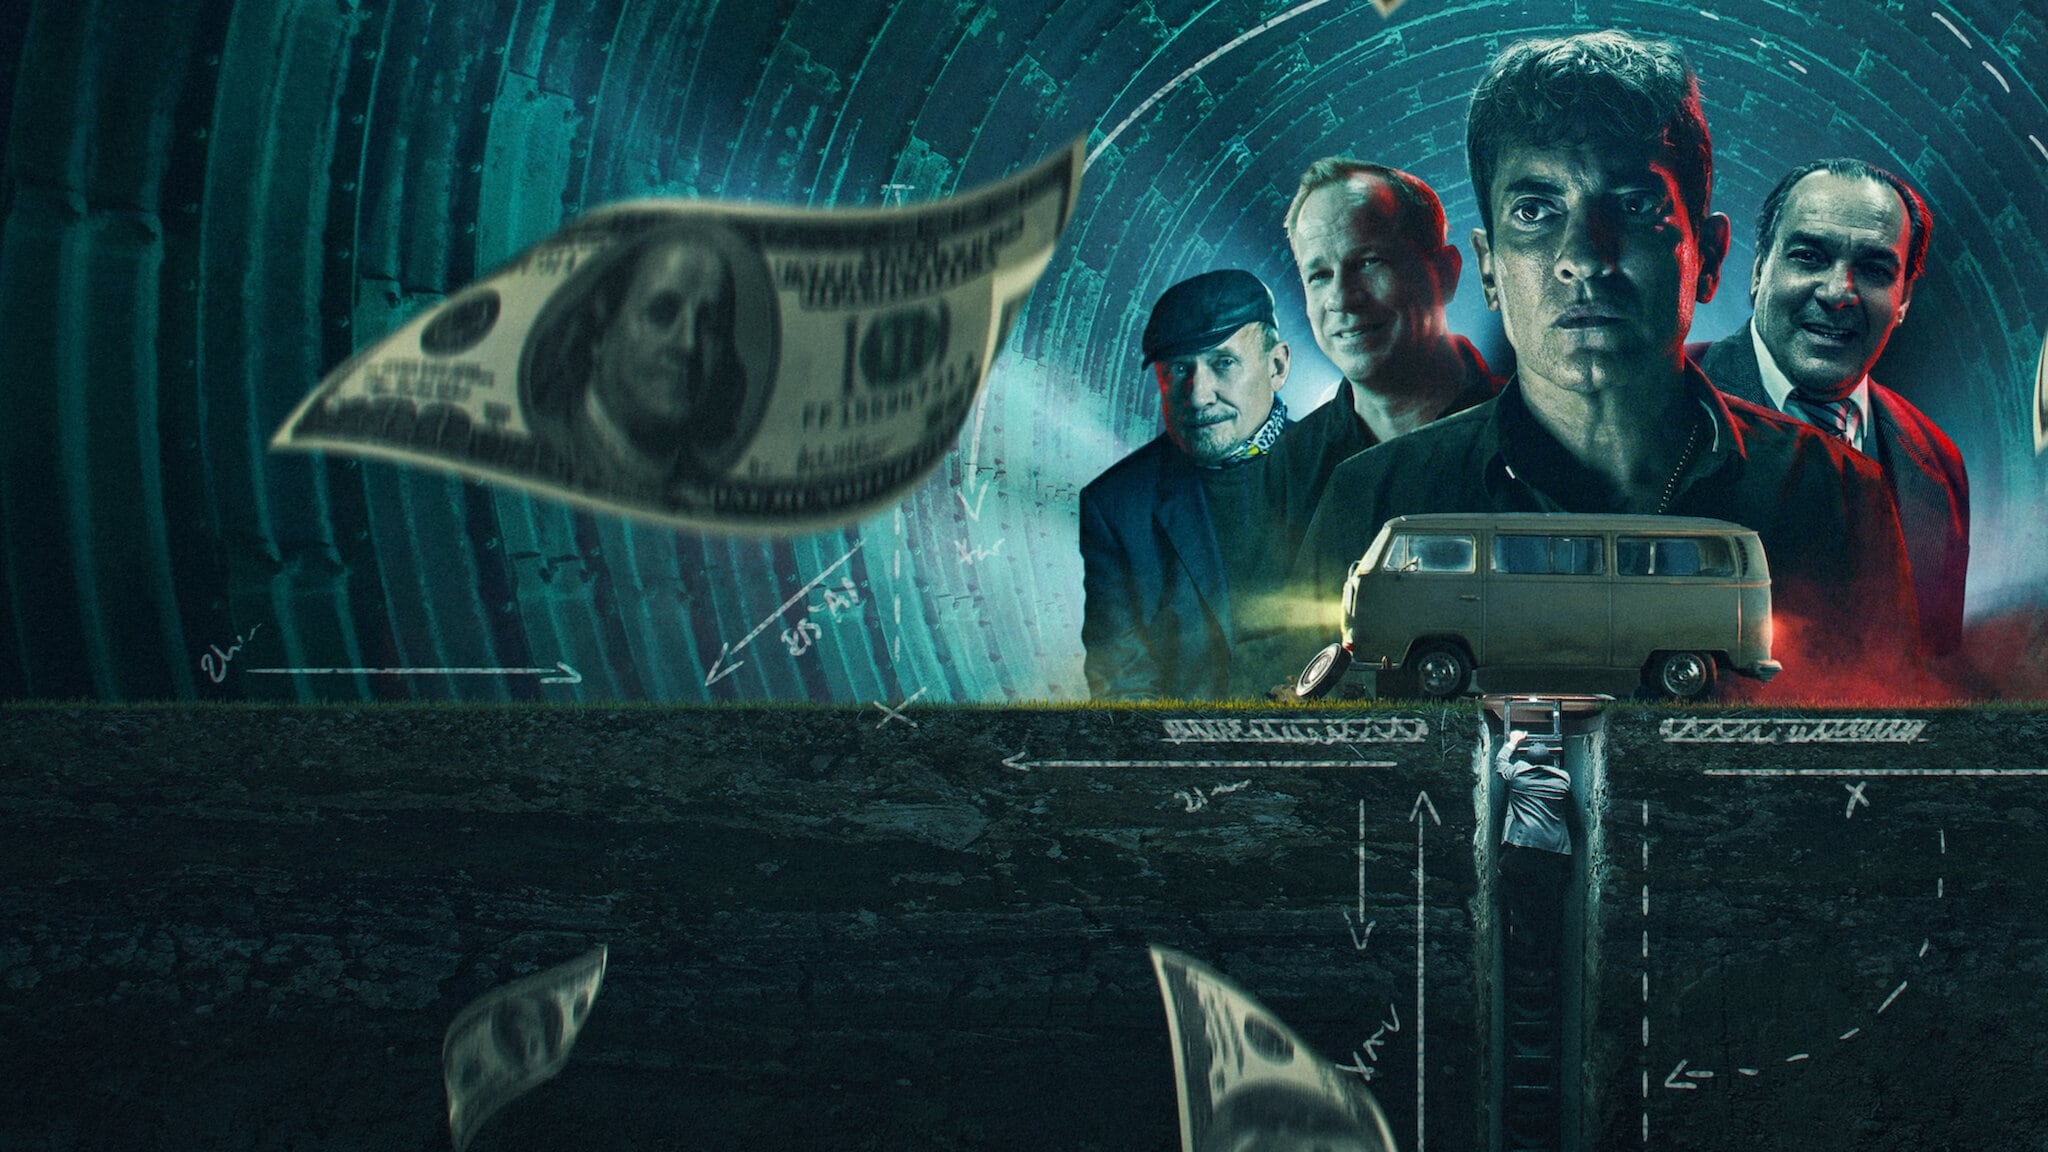 SPINNERHD - Bank Robbers: The Last Great Heist (2022) ปล้นใหญ่ครั้งสุดท้าย